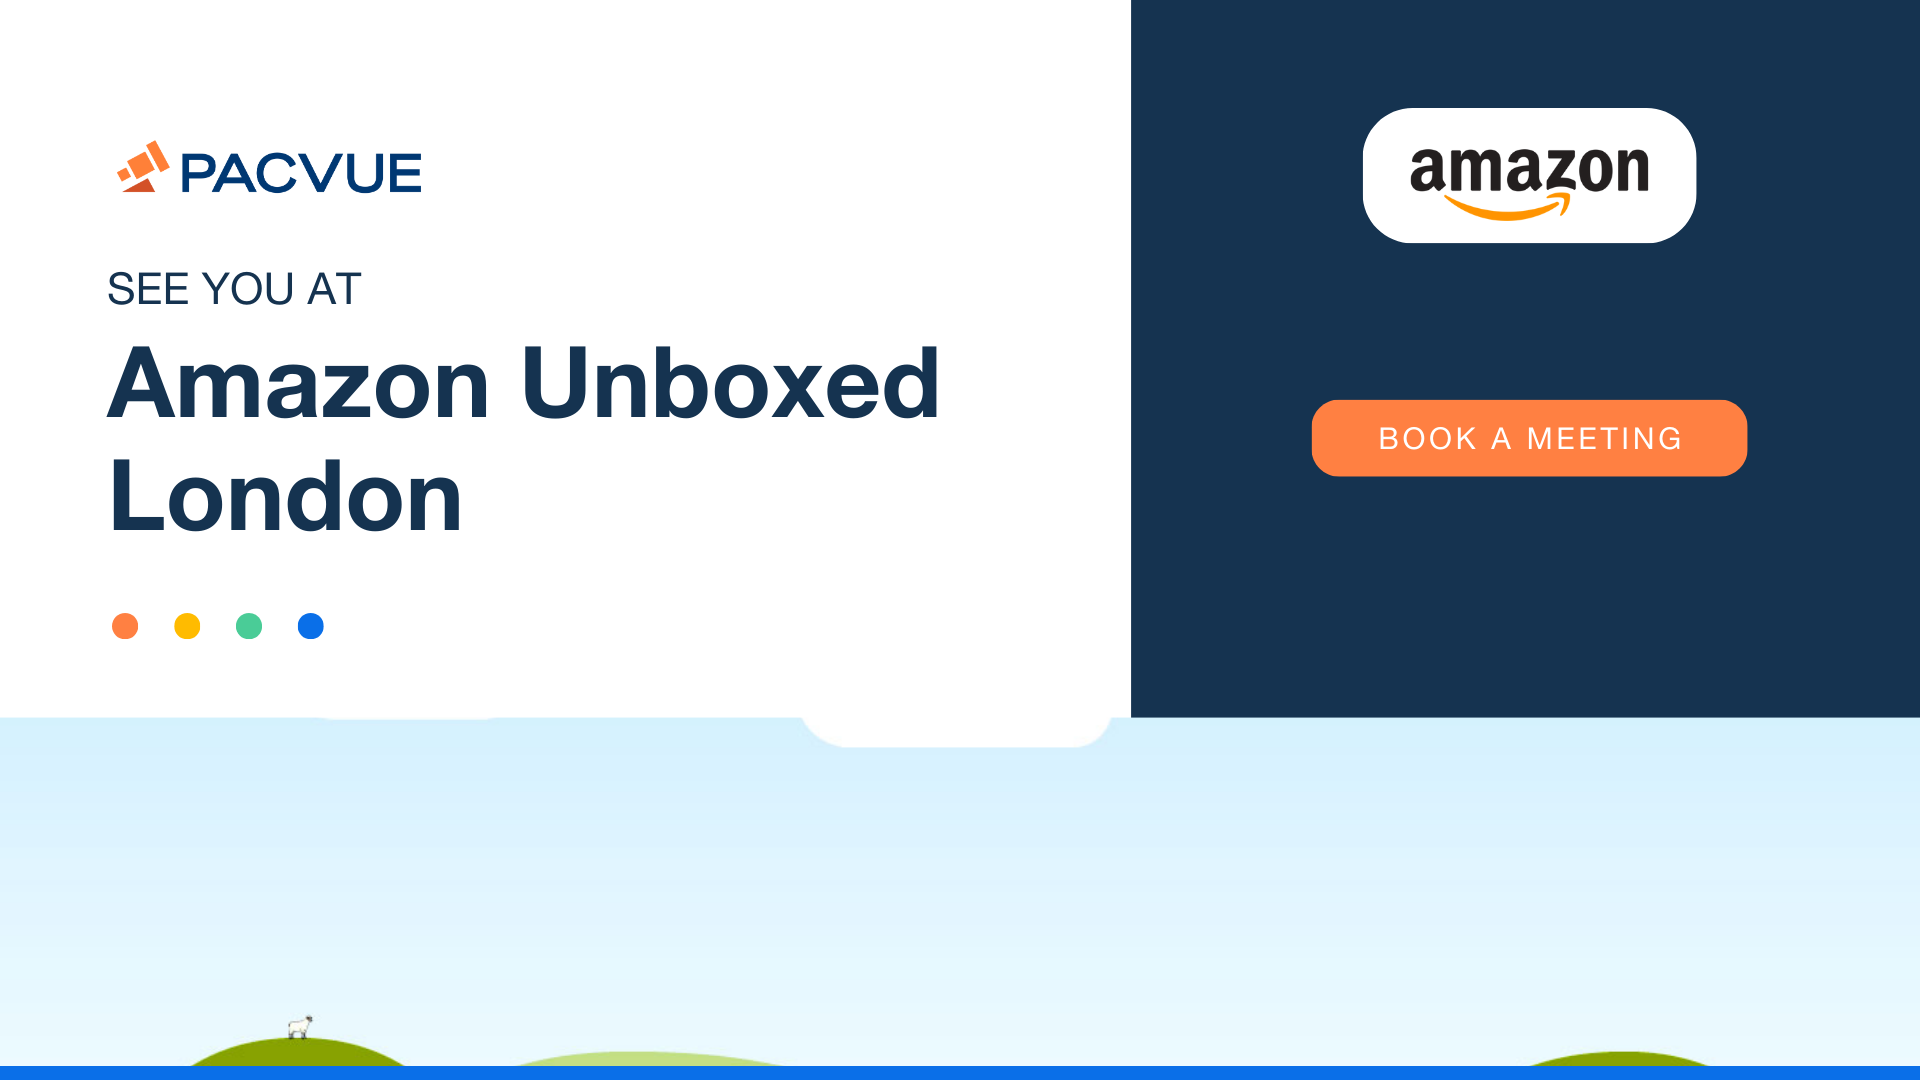 Amazon Unboxed London